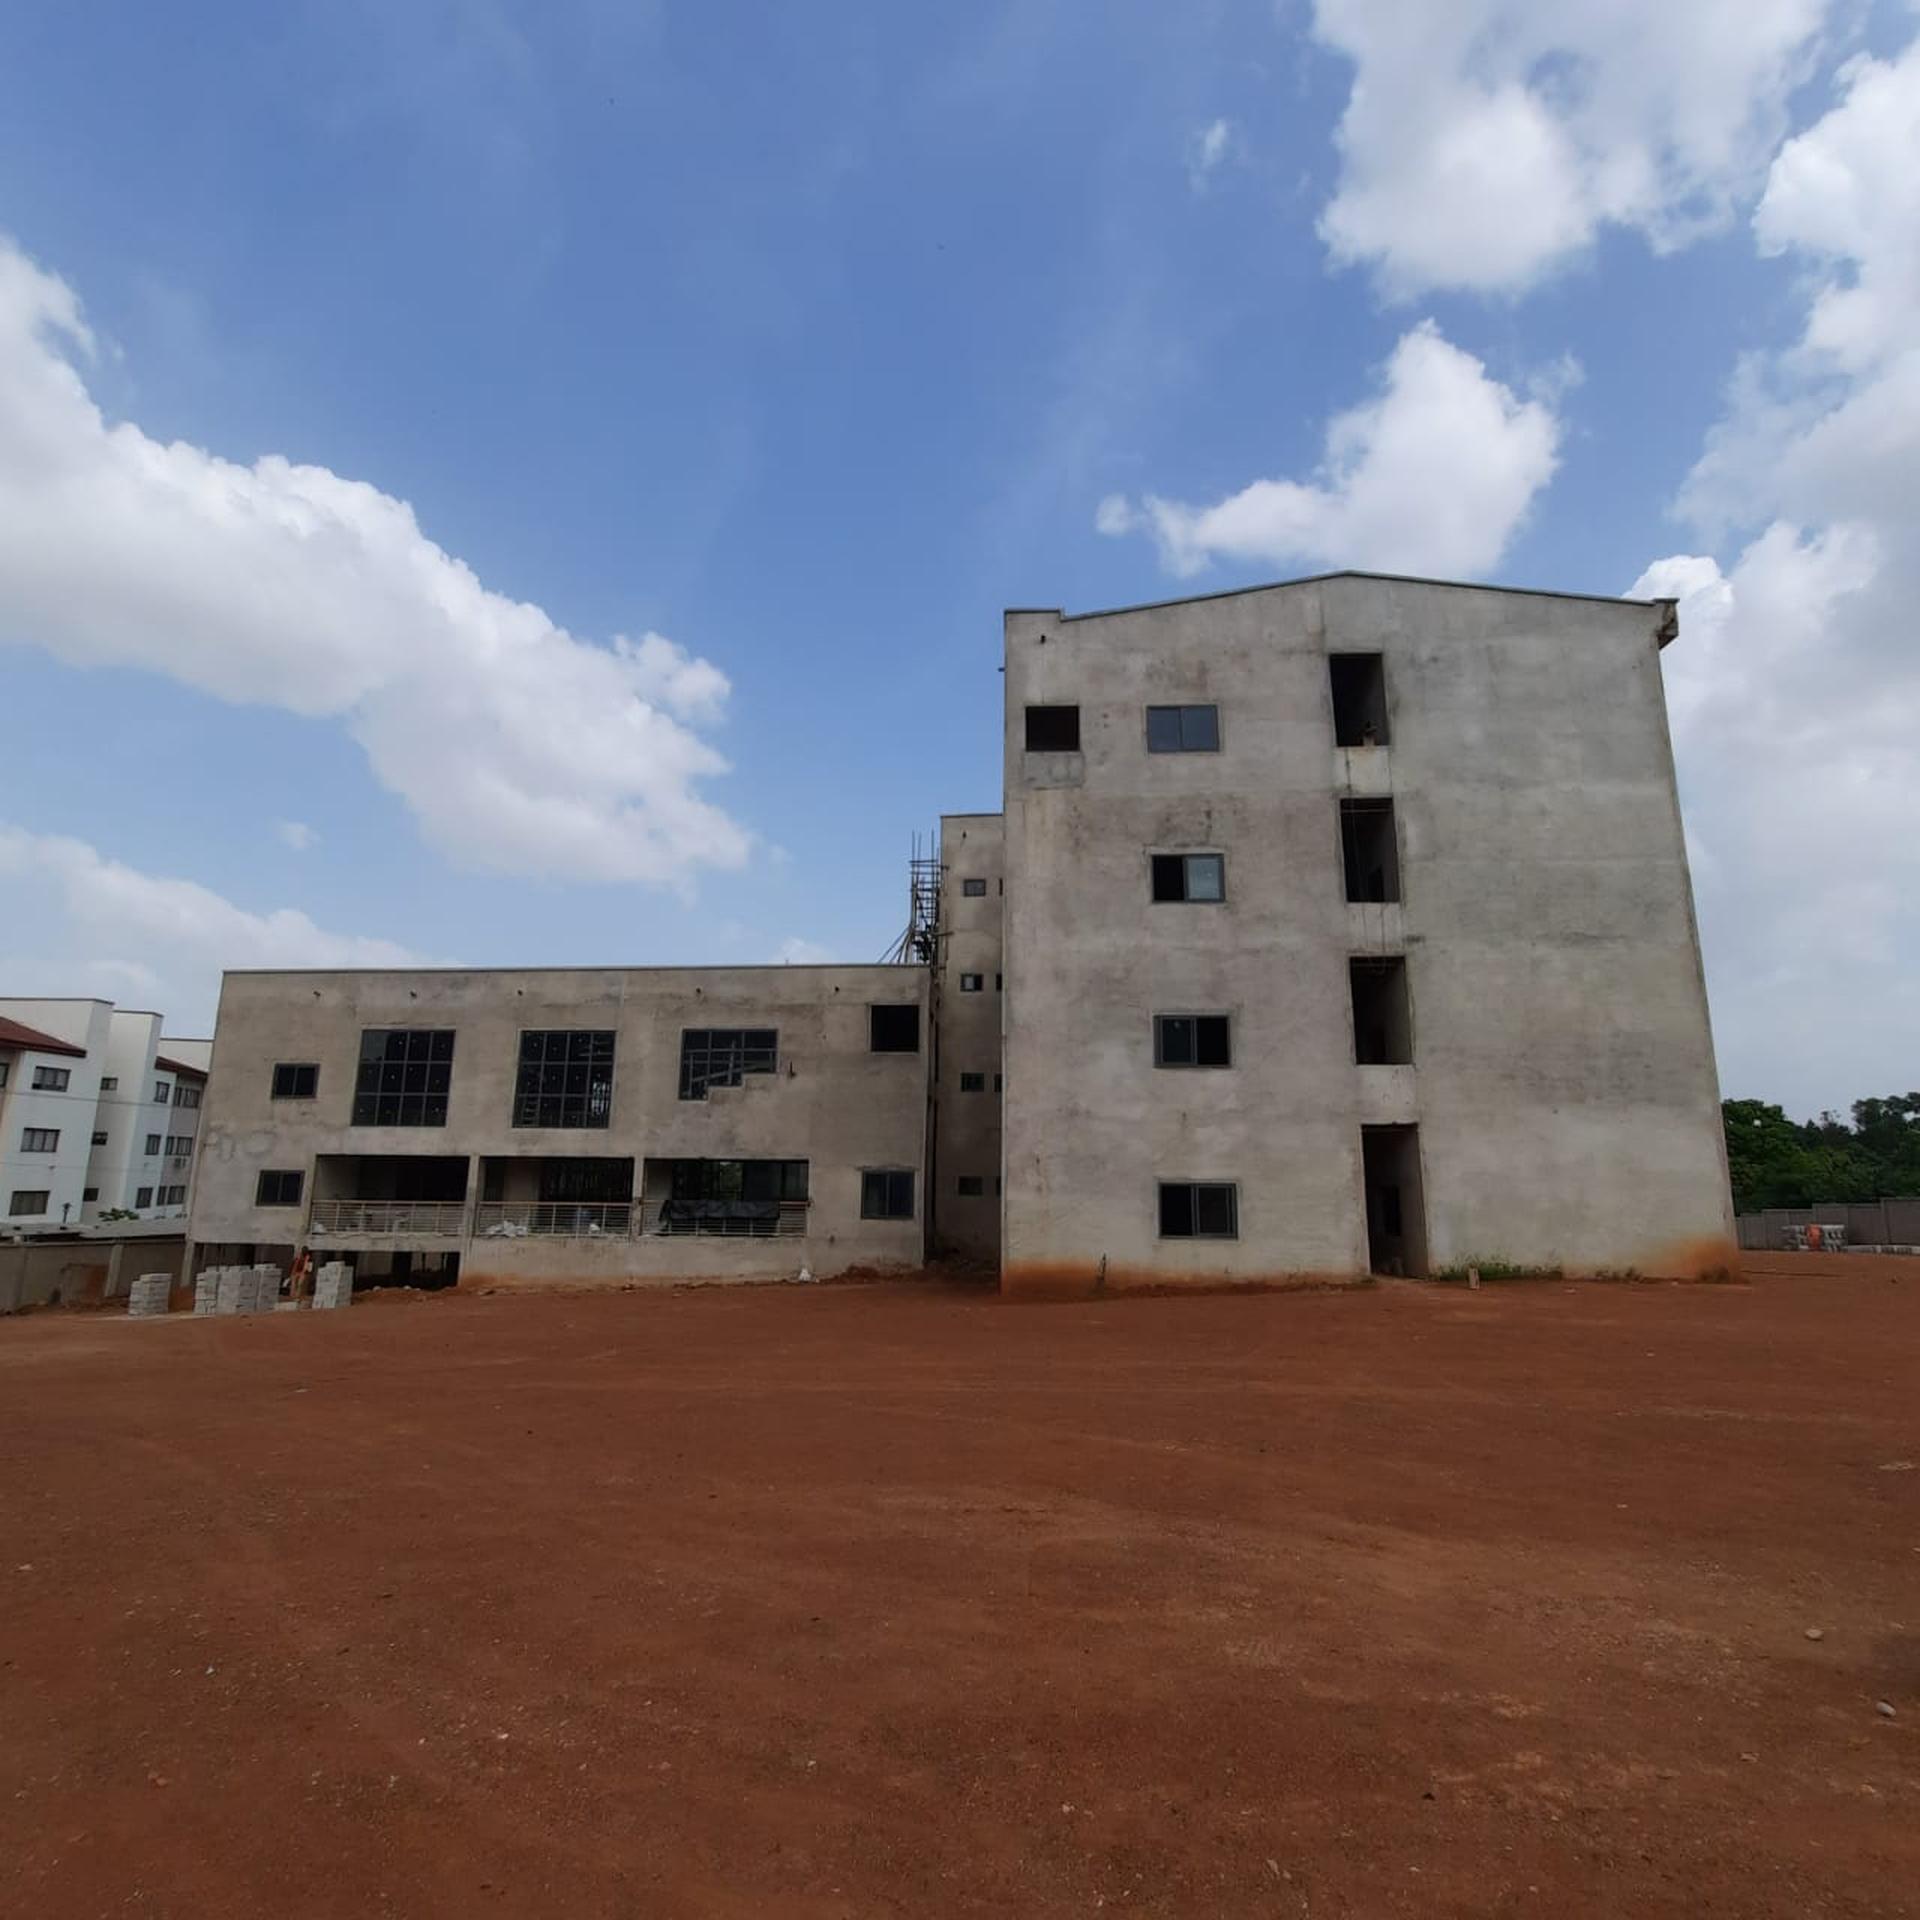 Audit Service Office Projects, Denyame - Kumasi